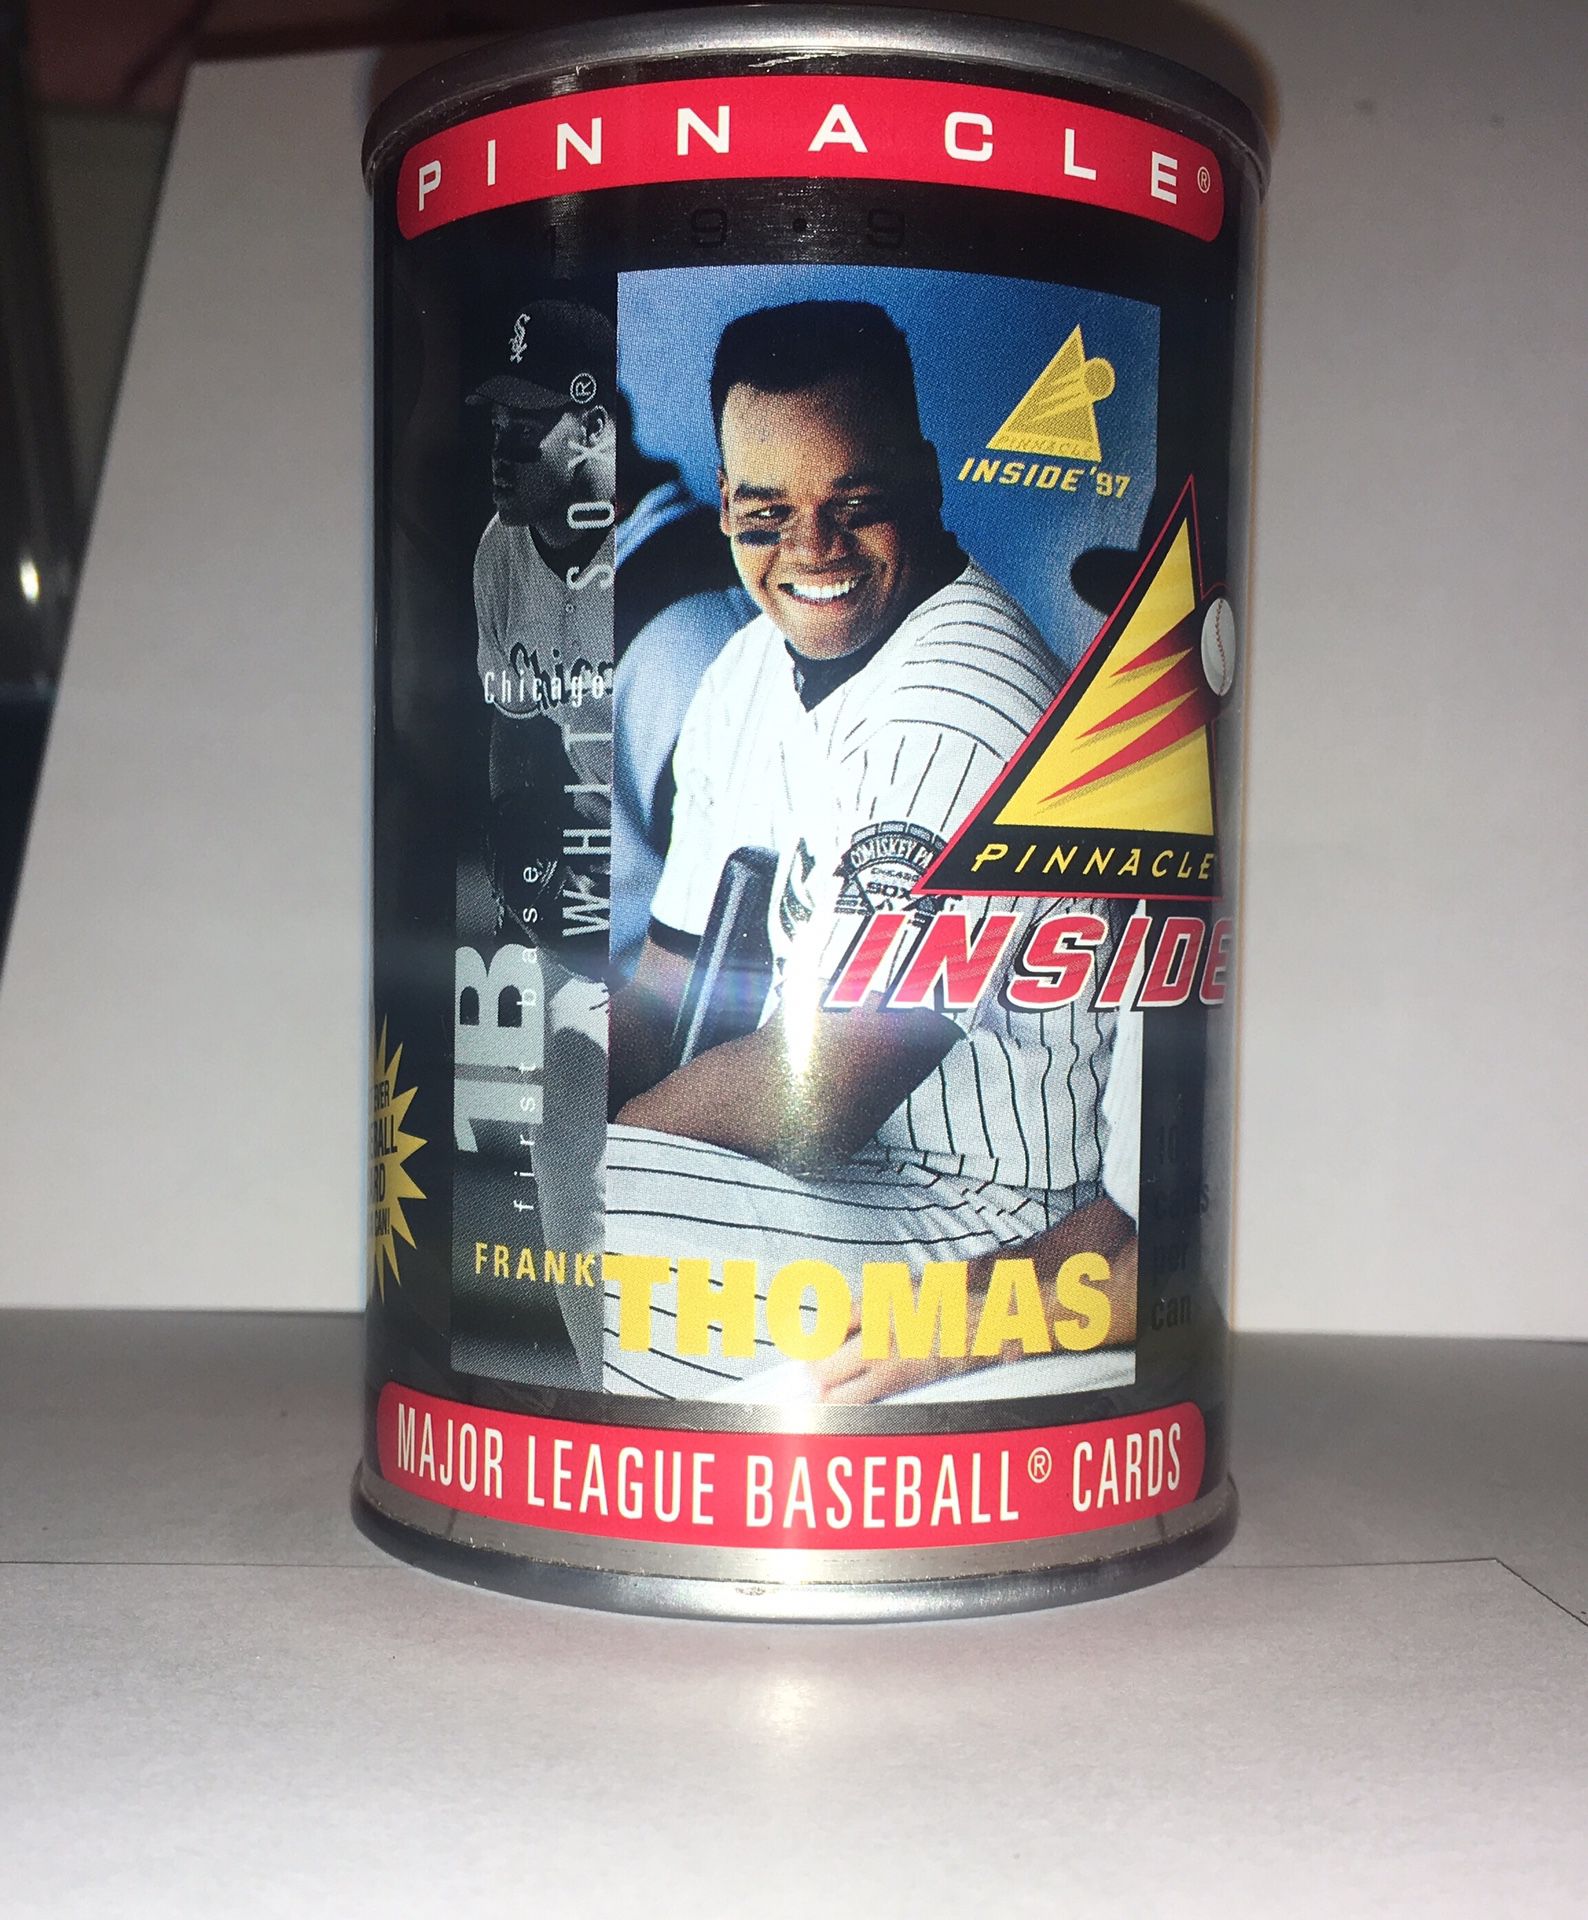 Frank Thomas 1997 Pinnacle MLB unopened can of cards.